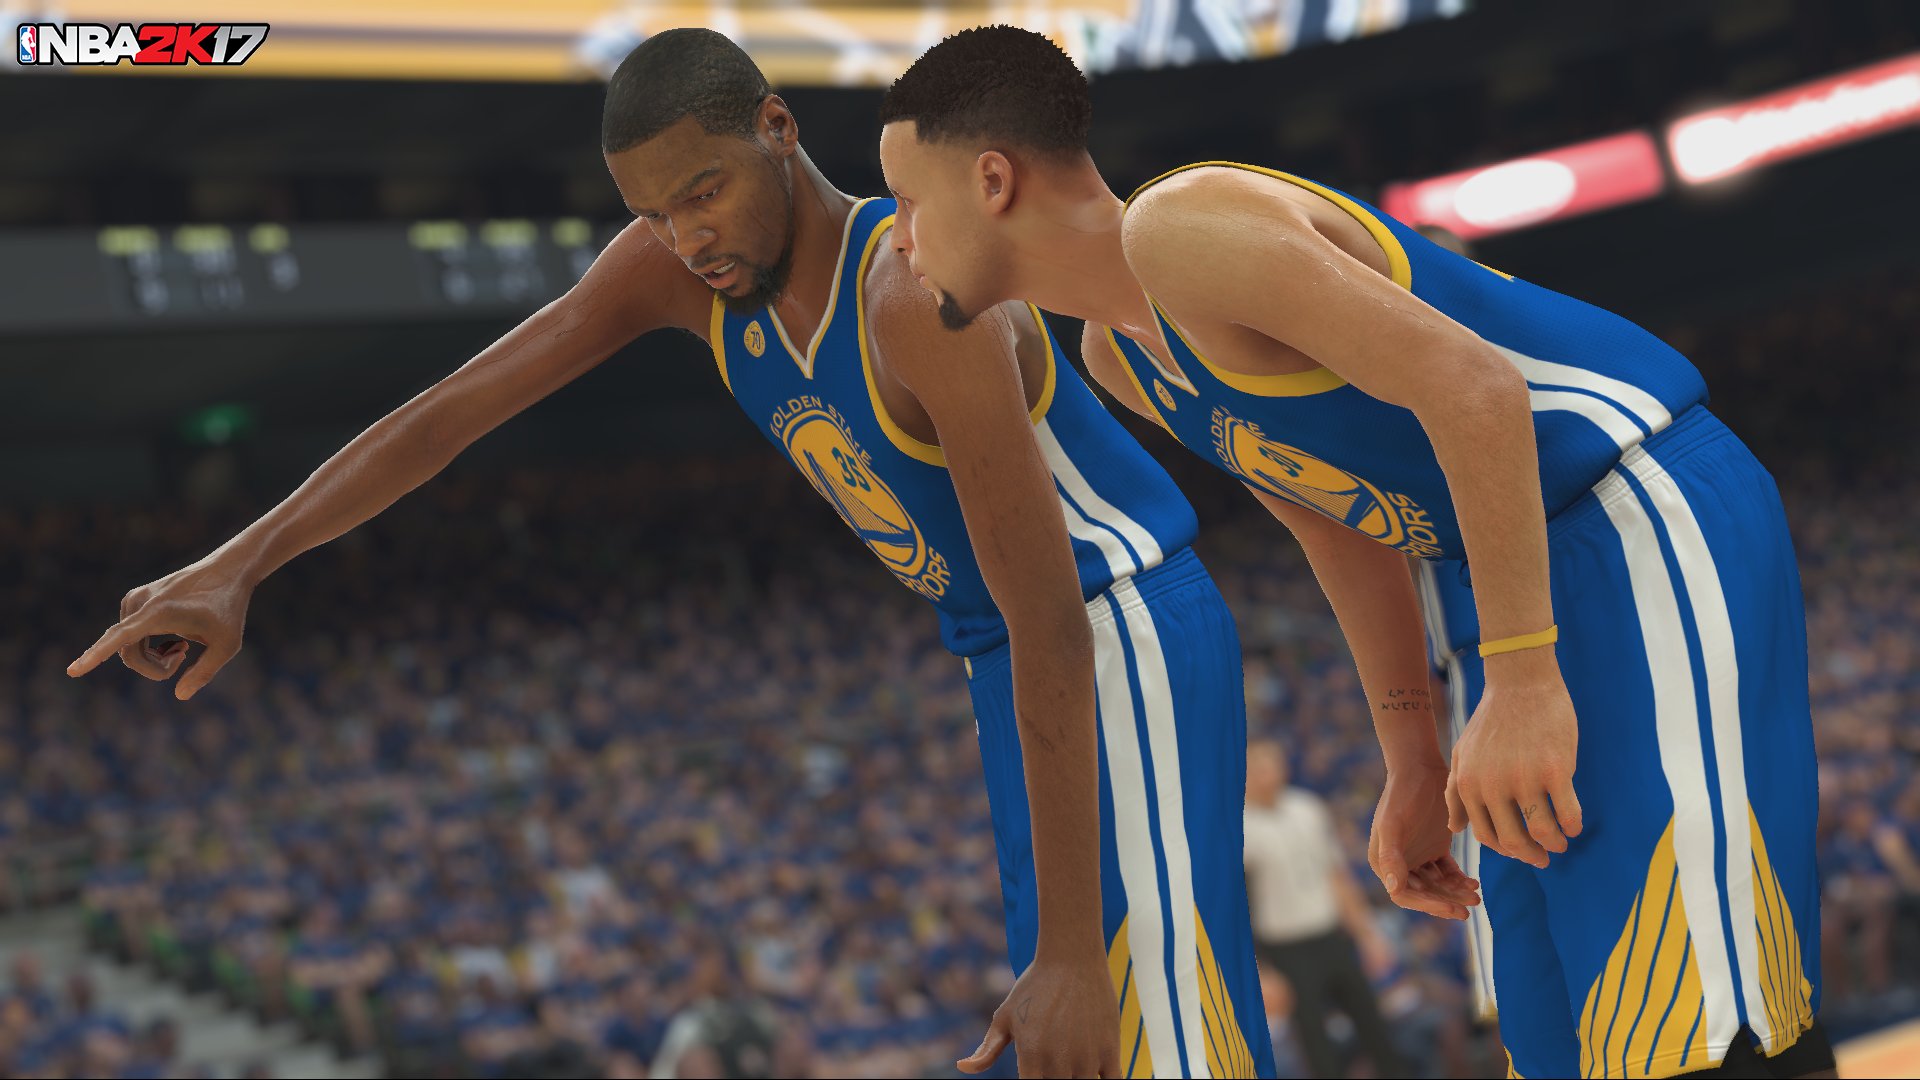 NBA 2K16 - Fan Creates Fallout Inspired Uniforms, Court Using